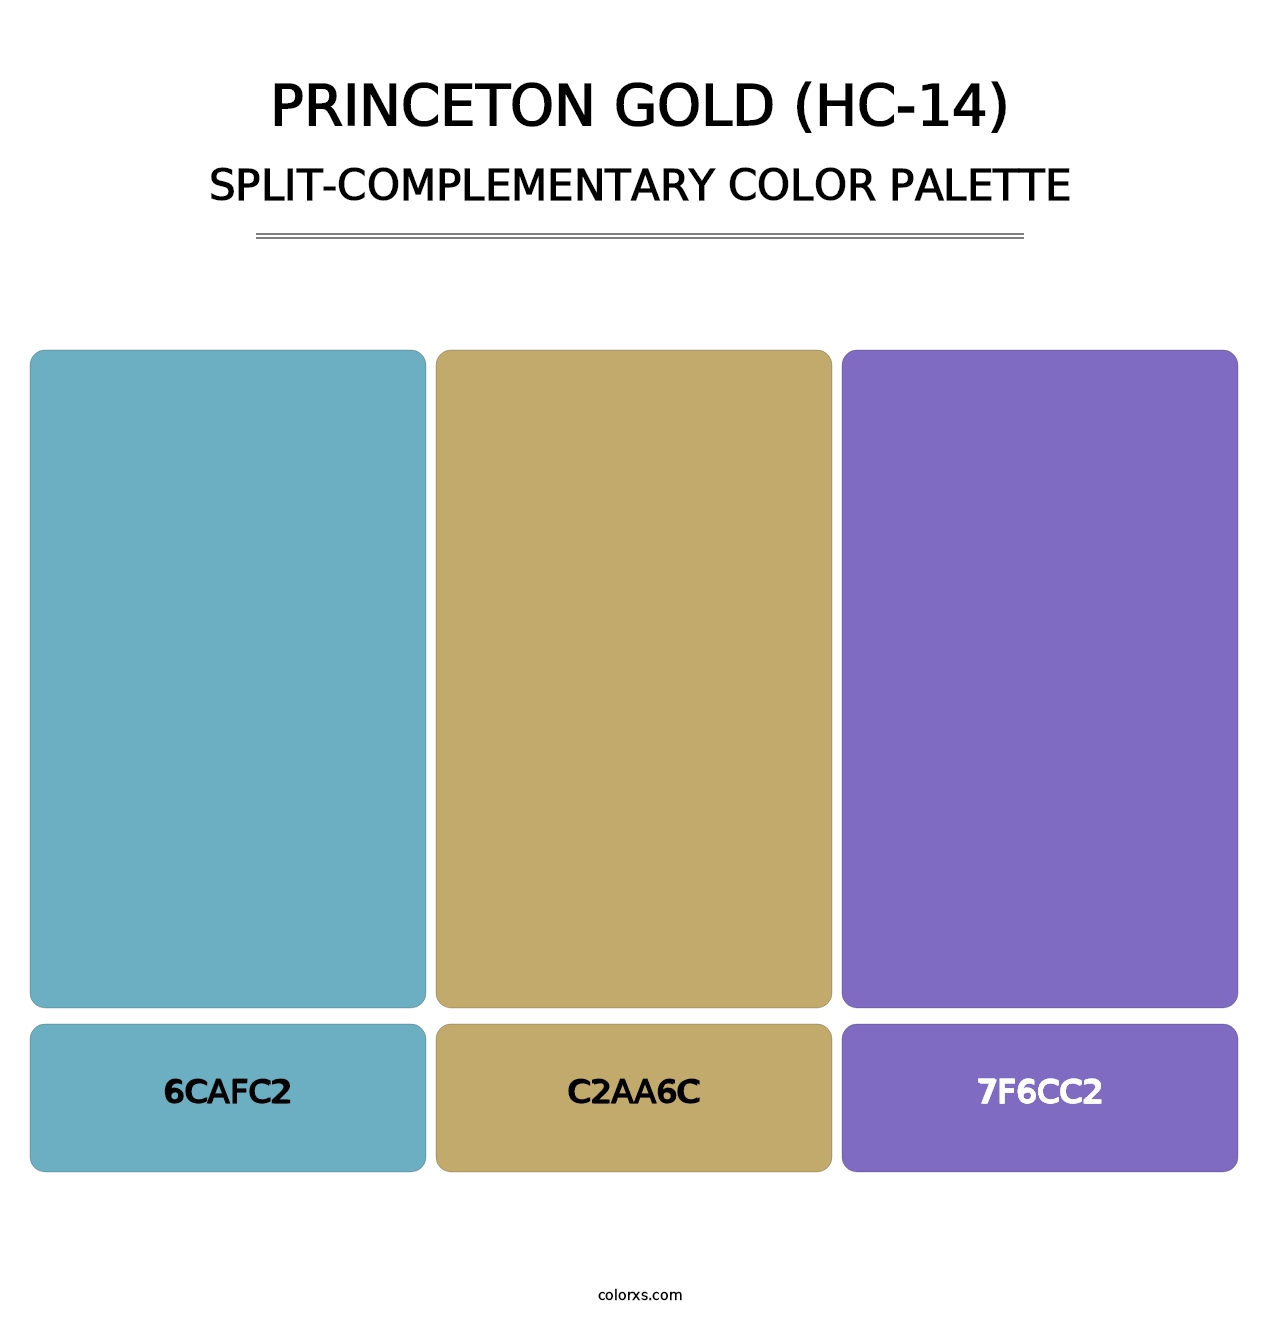 Princeton Gold (HC-14) - Split-Complementary Color Palette